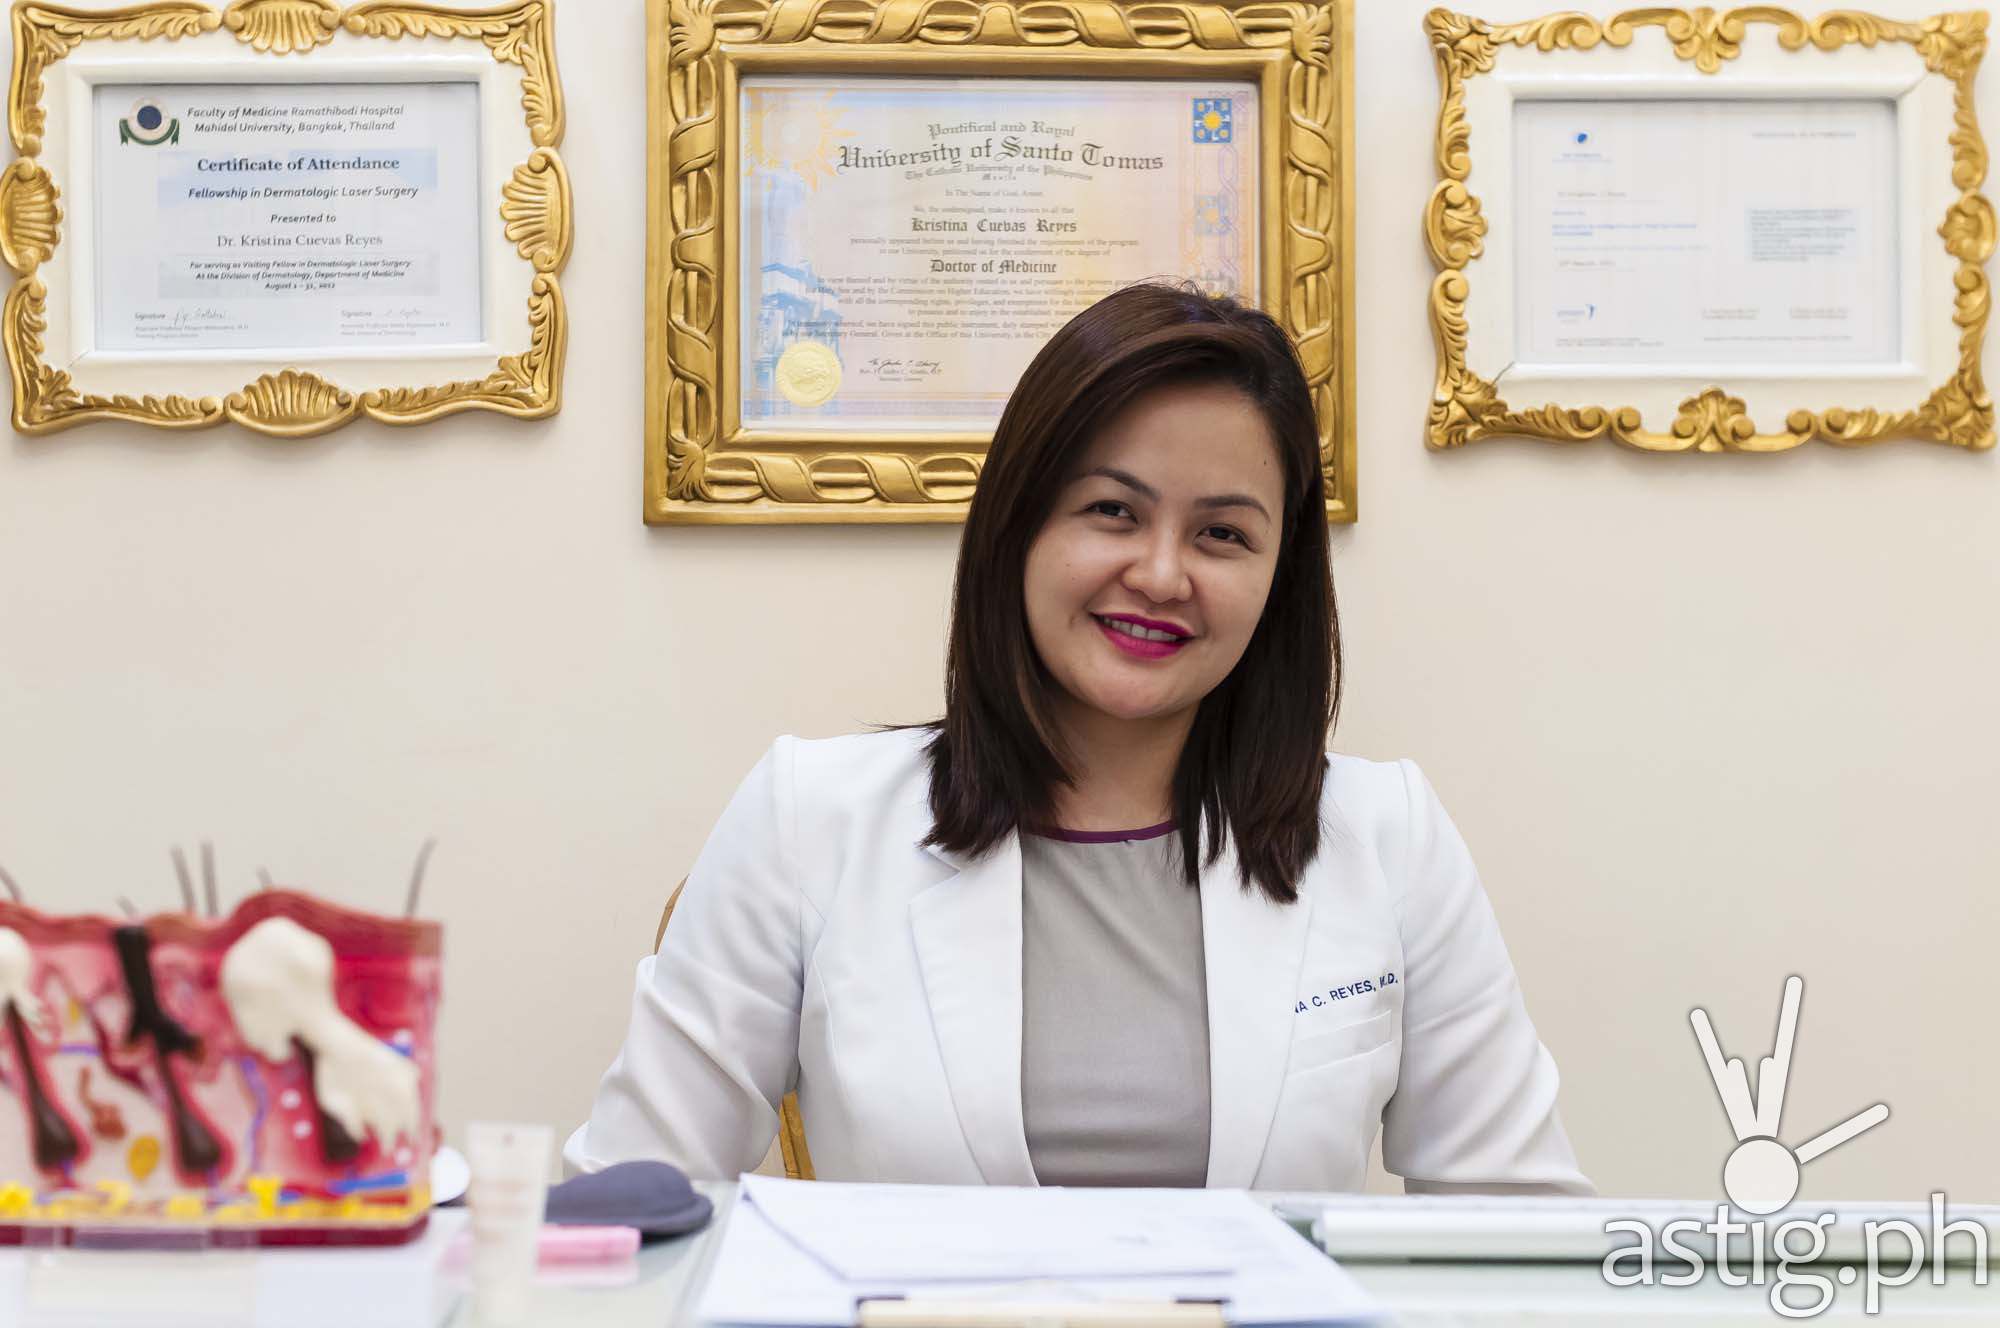 Luminisce dermatological clinic is the brainchild of Dr Kaycee Reyes